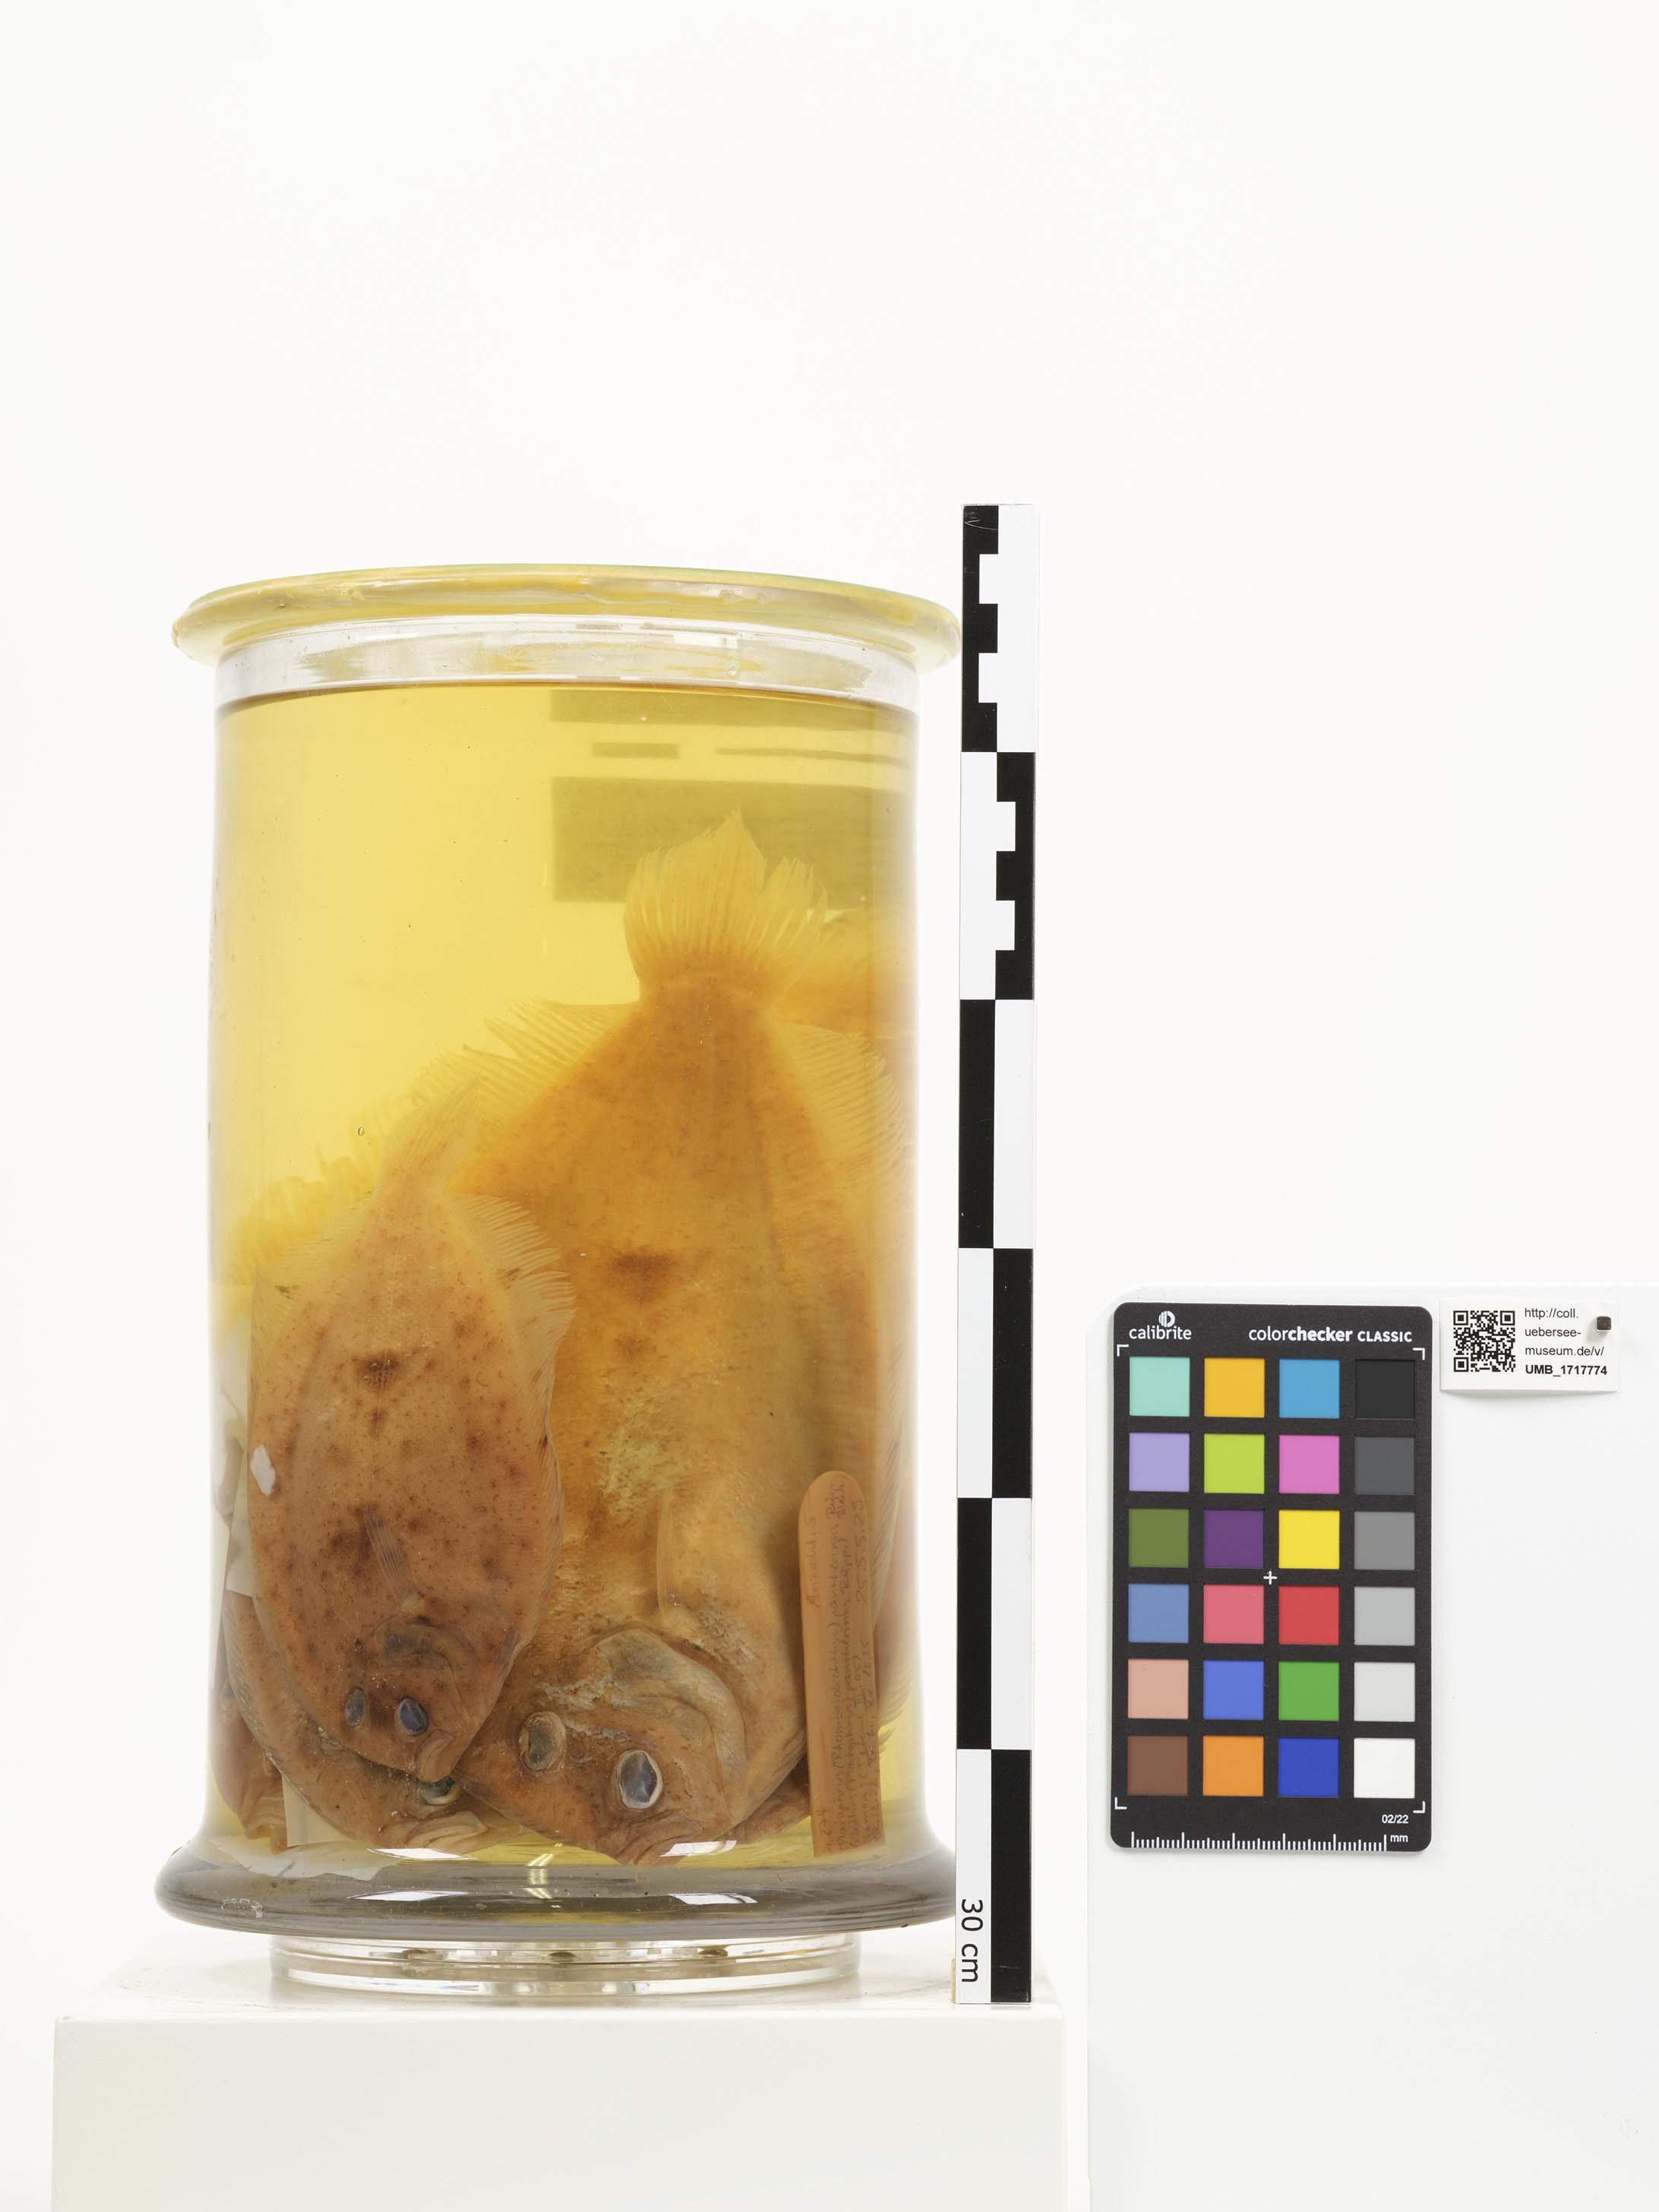 UMB_1717774 | Bothus pantherinus | ganzer Organismus (Übersee-Museum Bremen CC BY-NC-SA)